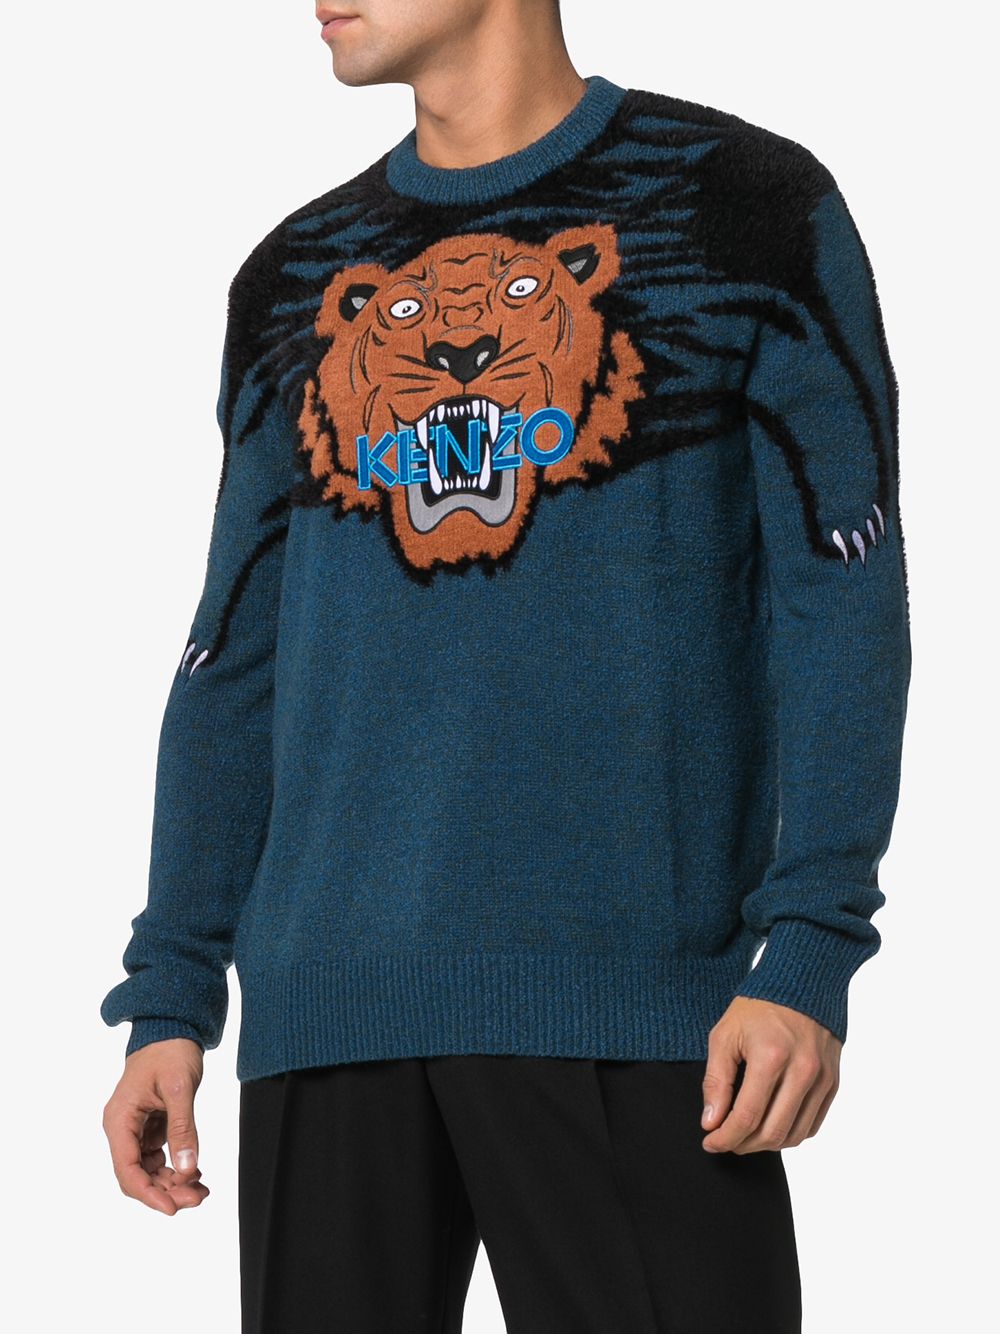 фото Kenzo свитер с крупным тигром вязки интарсия